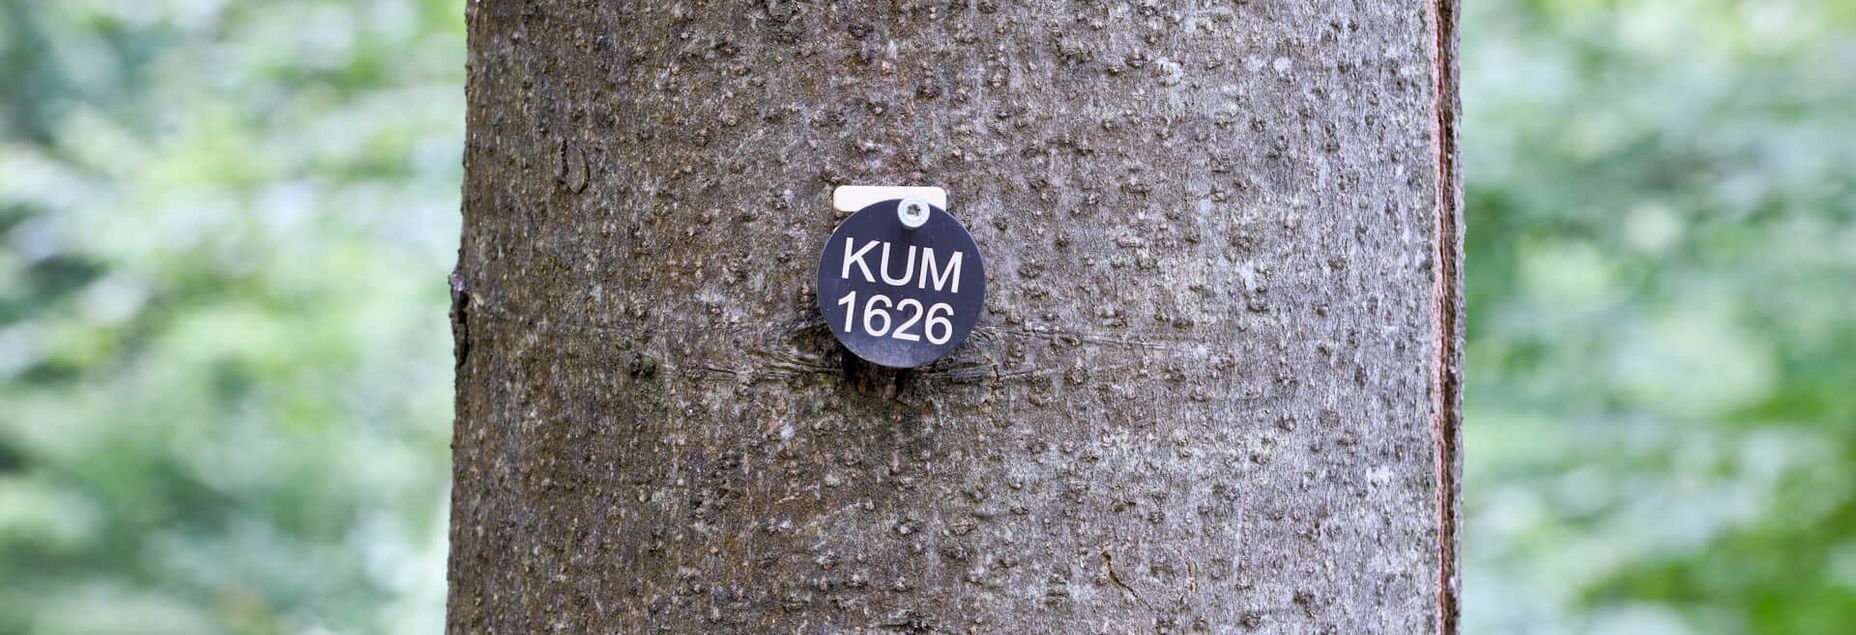 KUM 1626 - Plakette